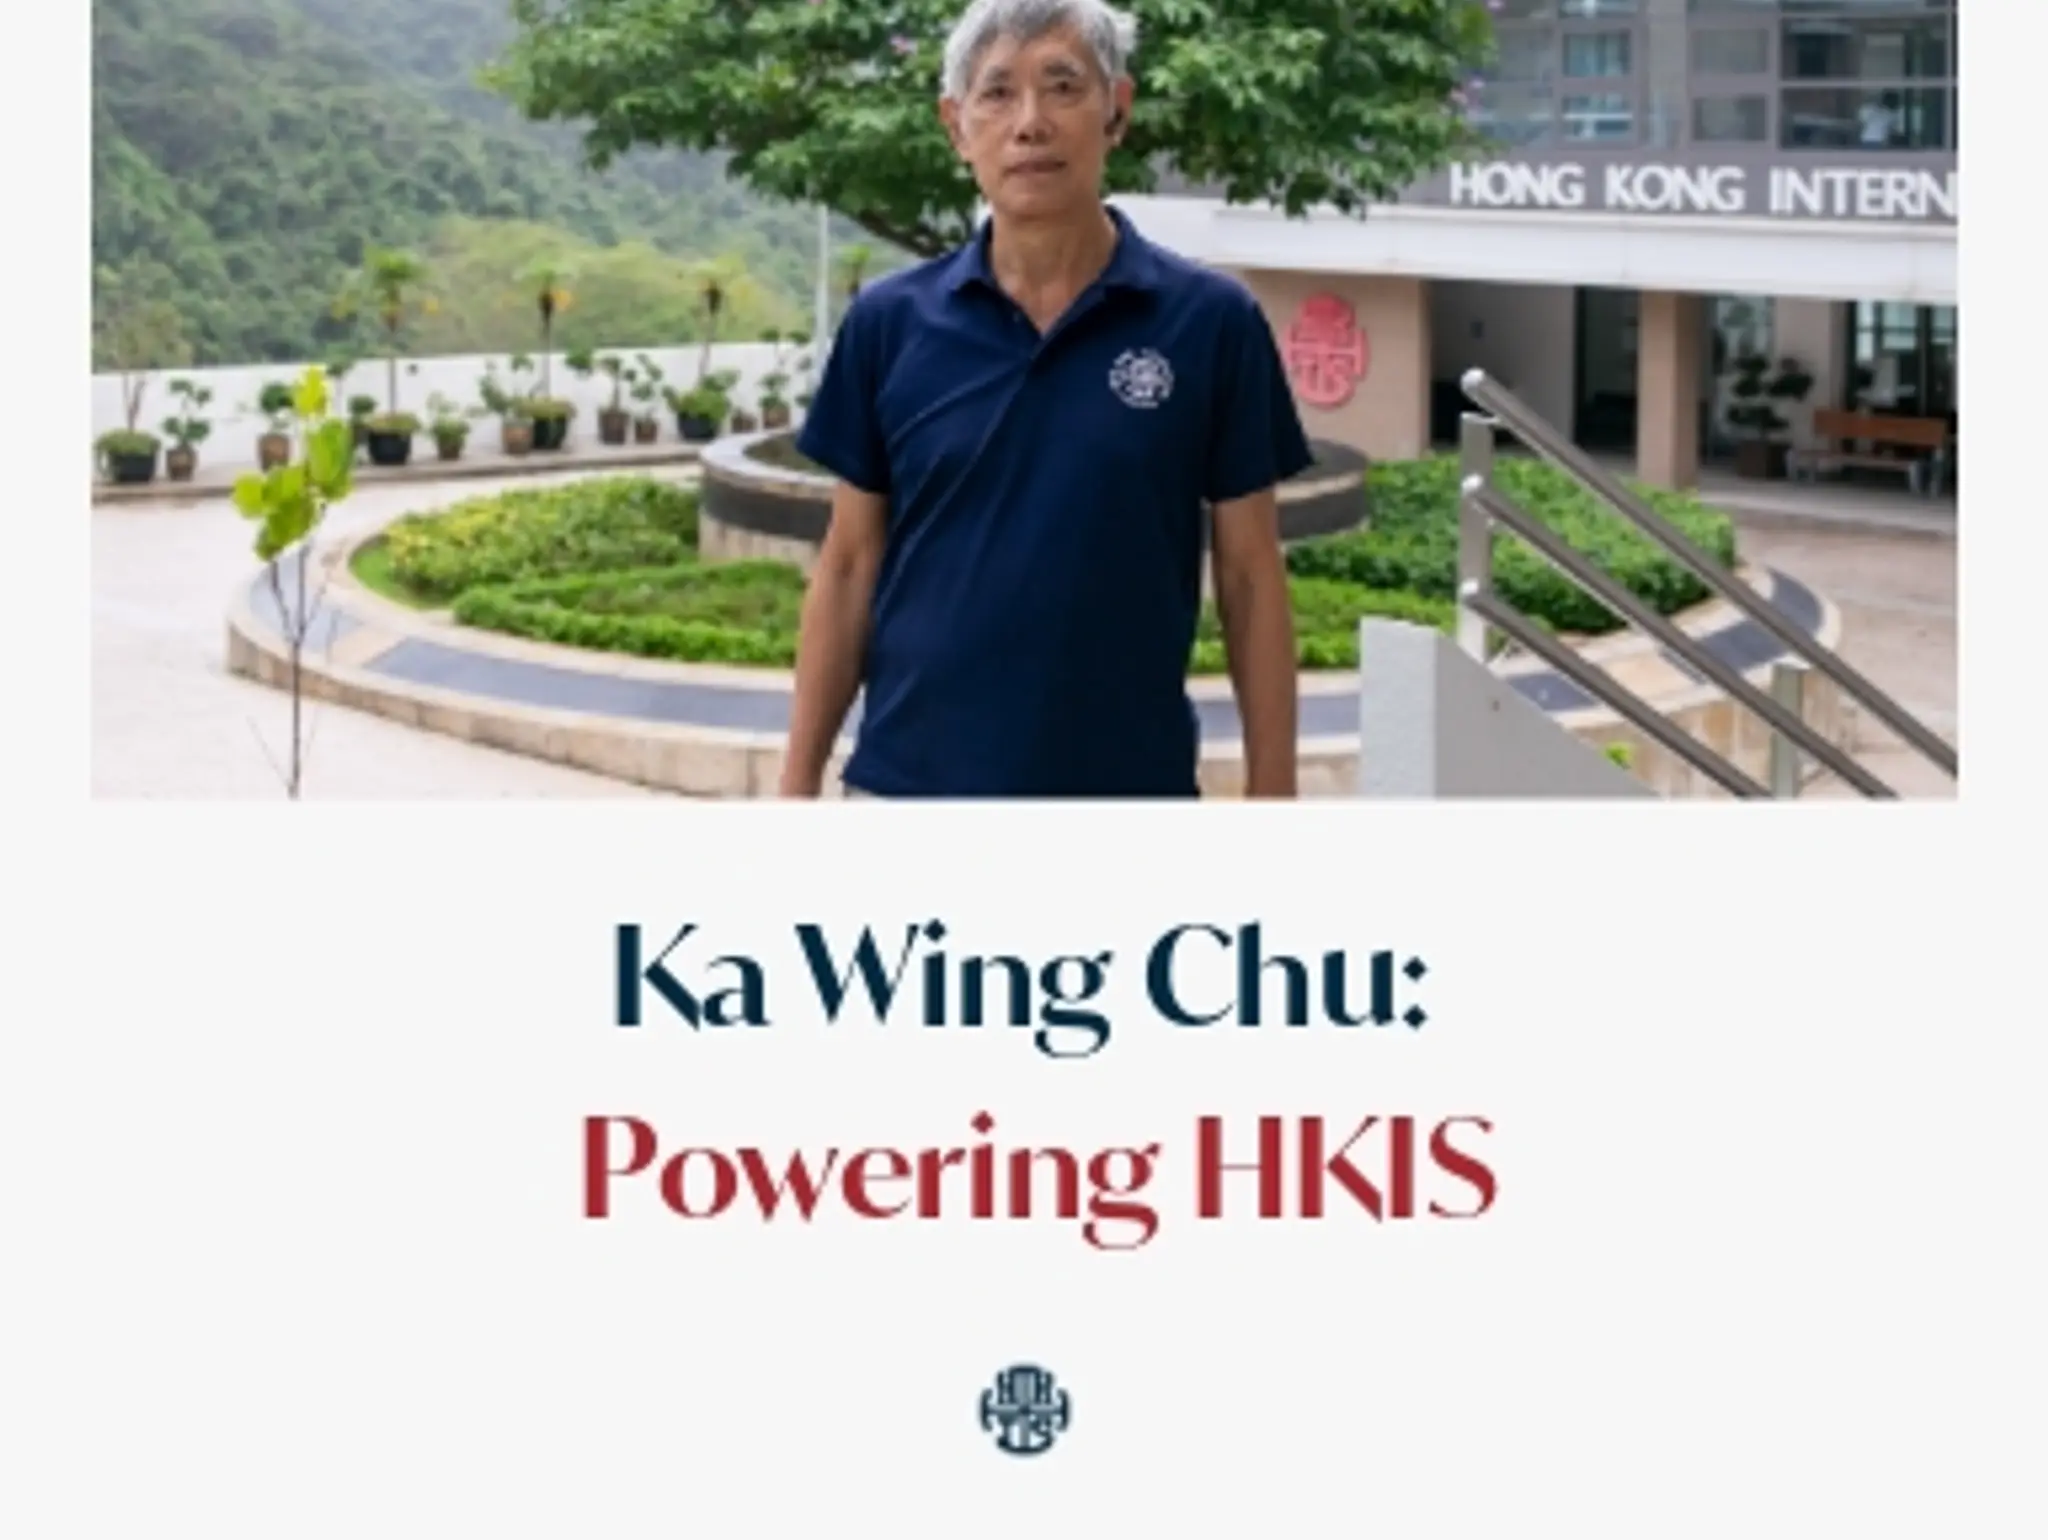 Ka Wing Chu: Powering HKIS